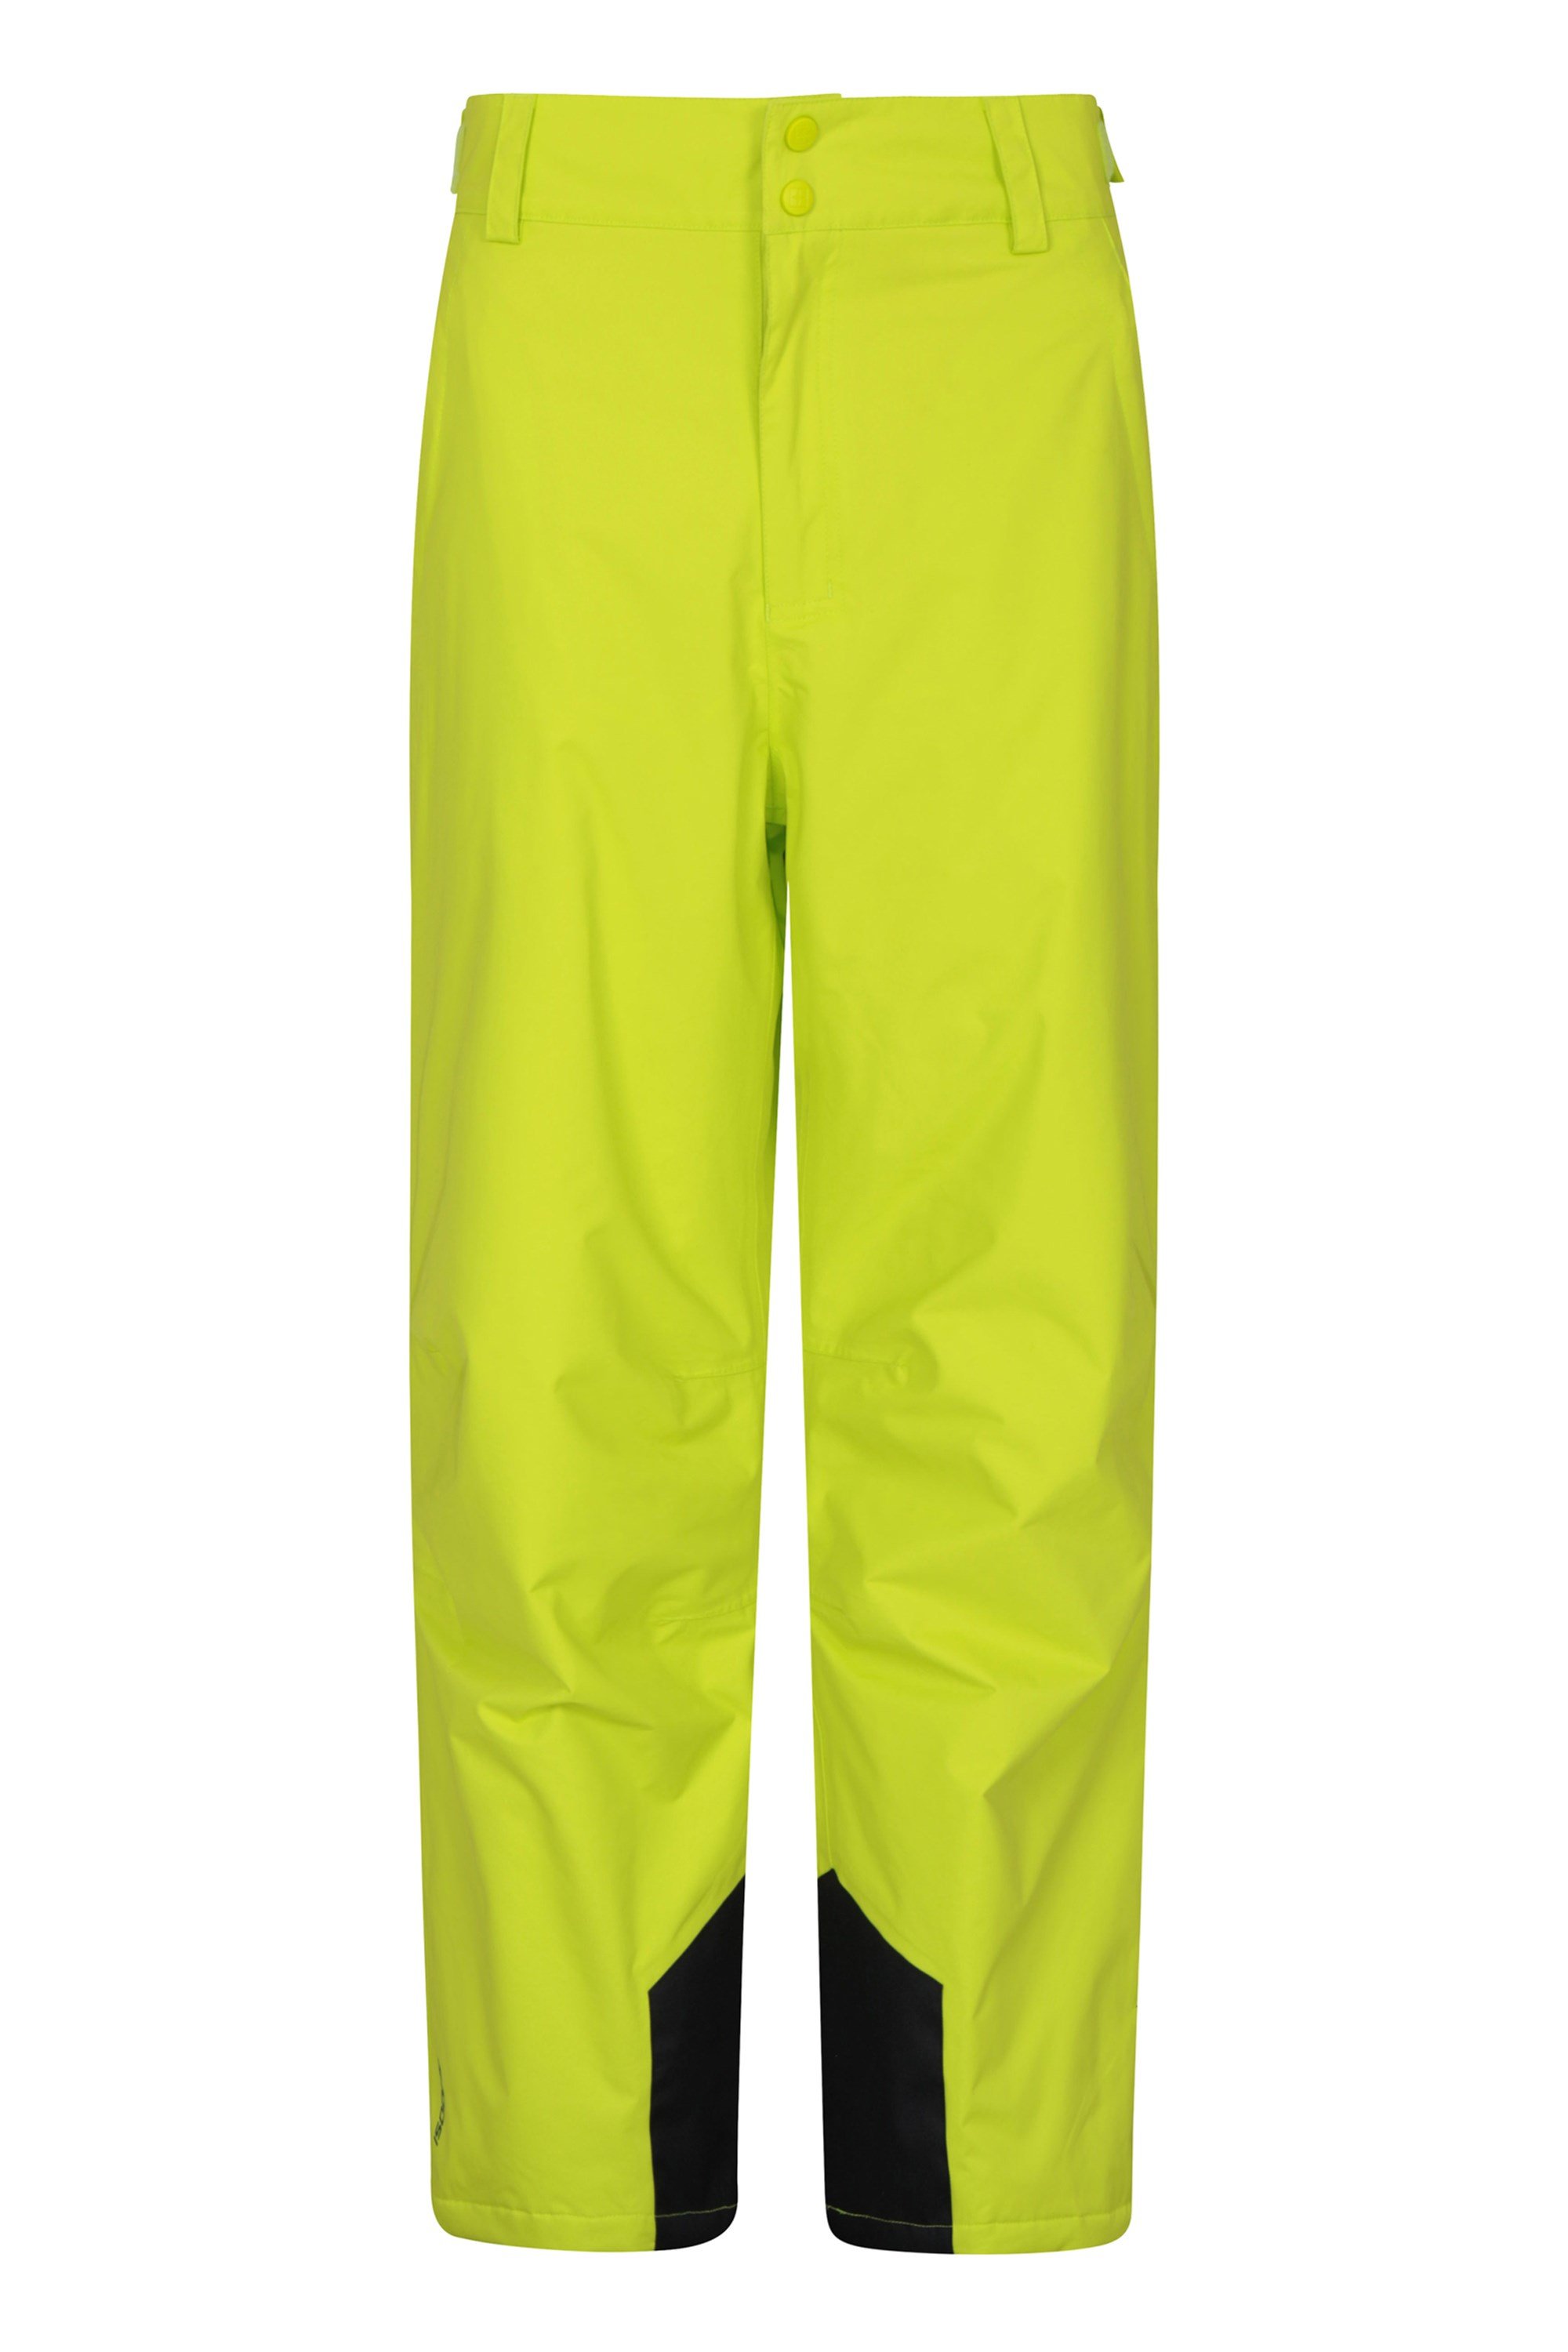 Gravity Mens Ski Pants - Short Length - Green